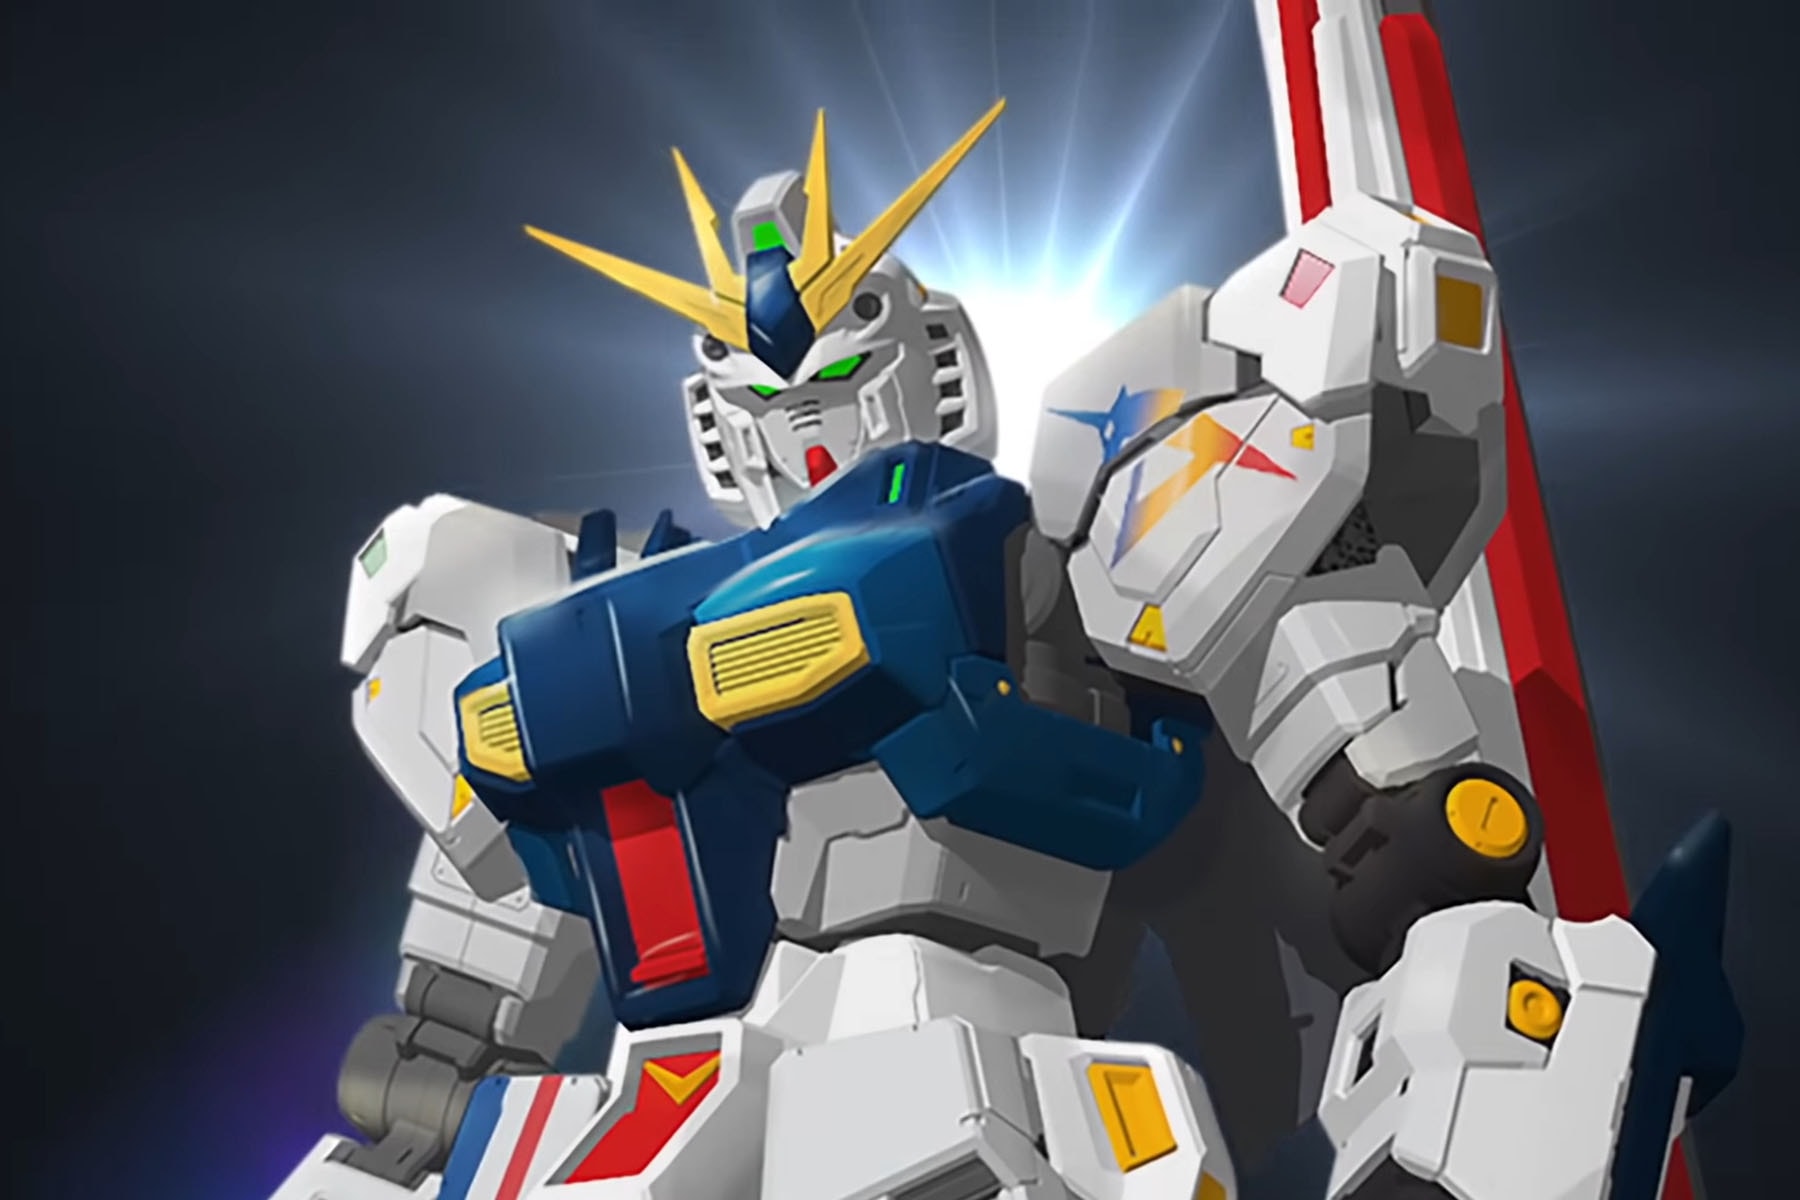 Gundam 為 LaLaport 福岡 1：1 尺寸「RX-93ff ν 鋼彈」發佈宣傳動畫